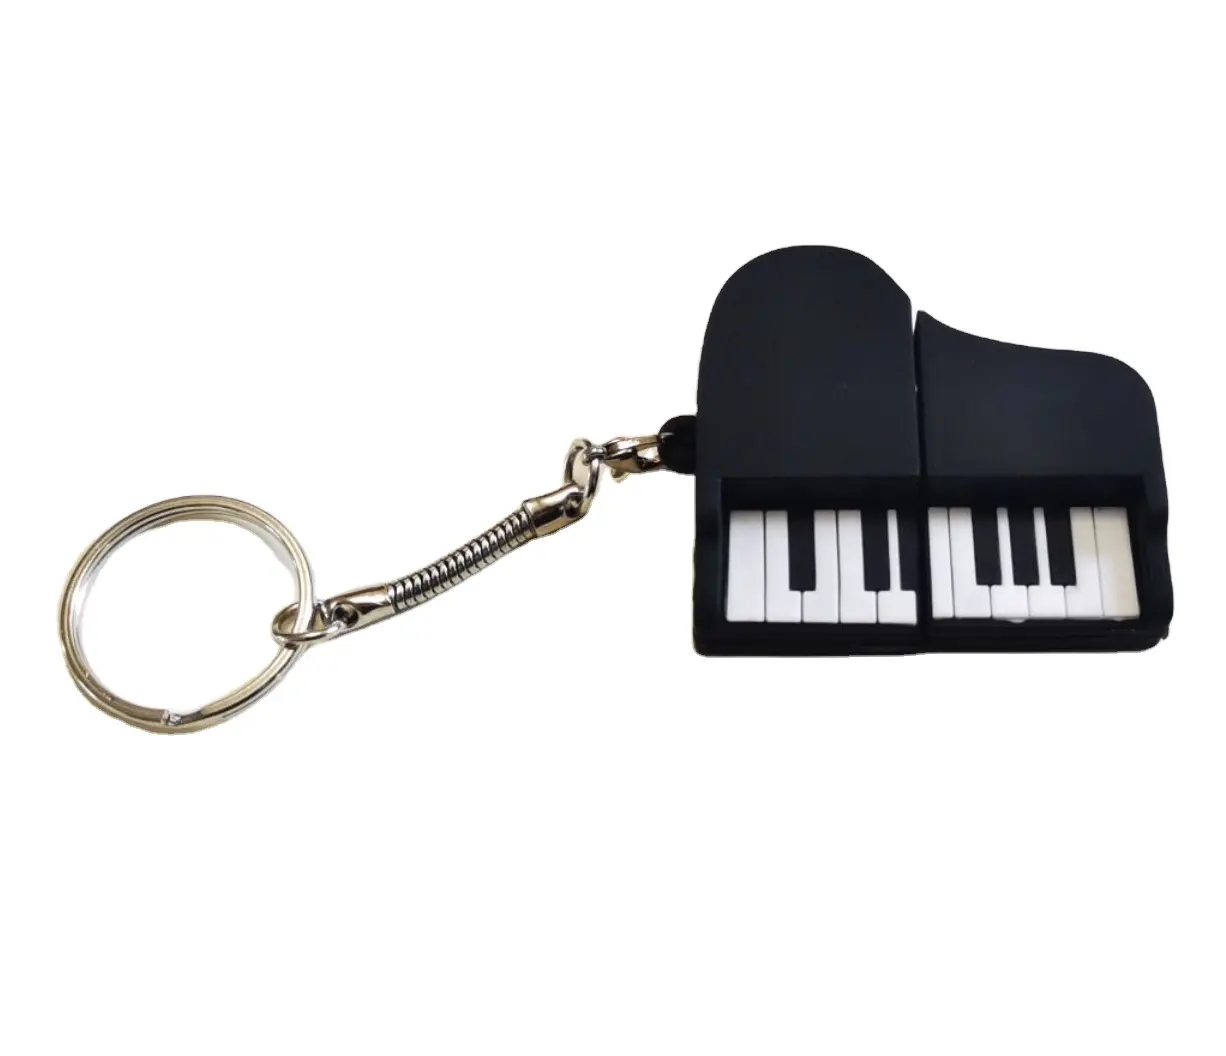 Pronto molde agradável instrumento musical piano forma usb flash drive memory stick 8gb 16gb 32gb 64gb